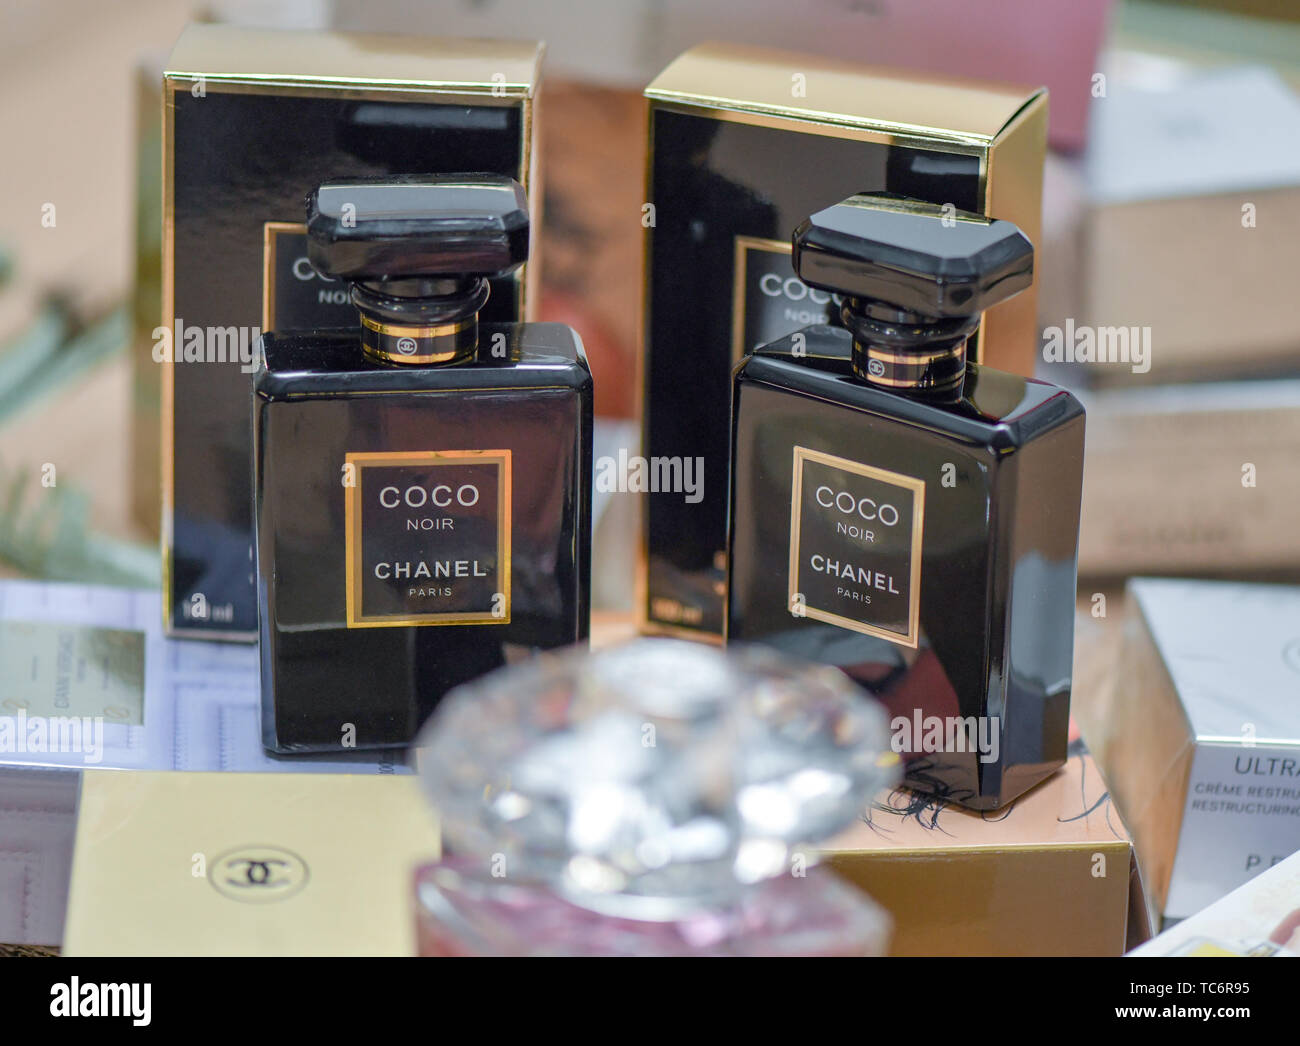 Image result for coco chanel perfume original